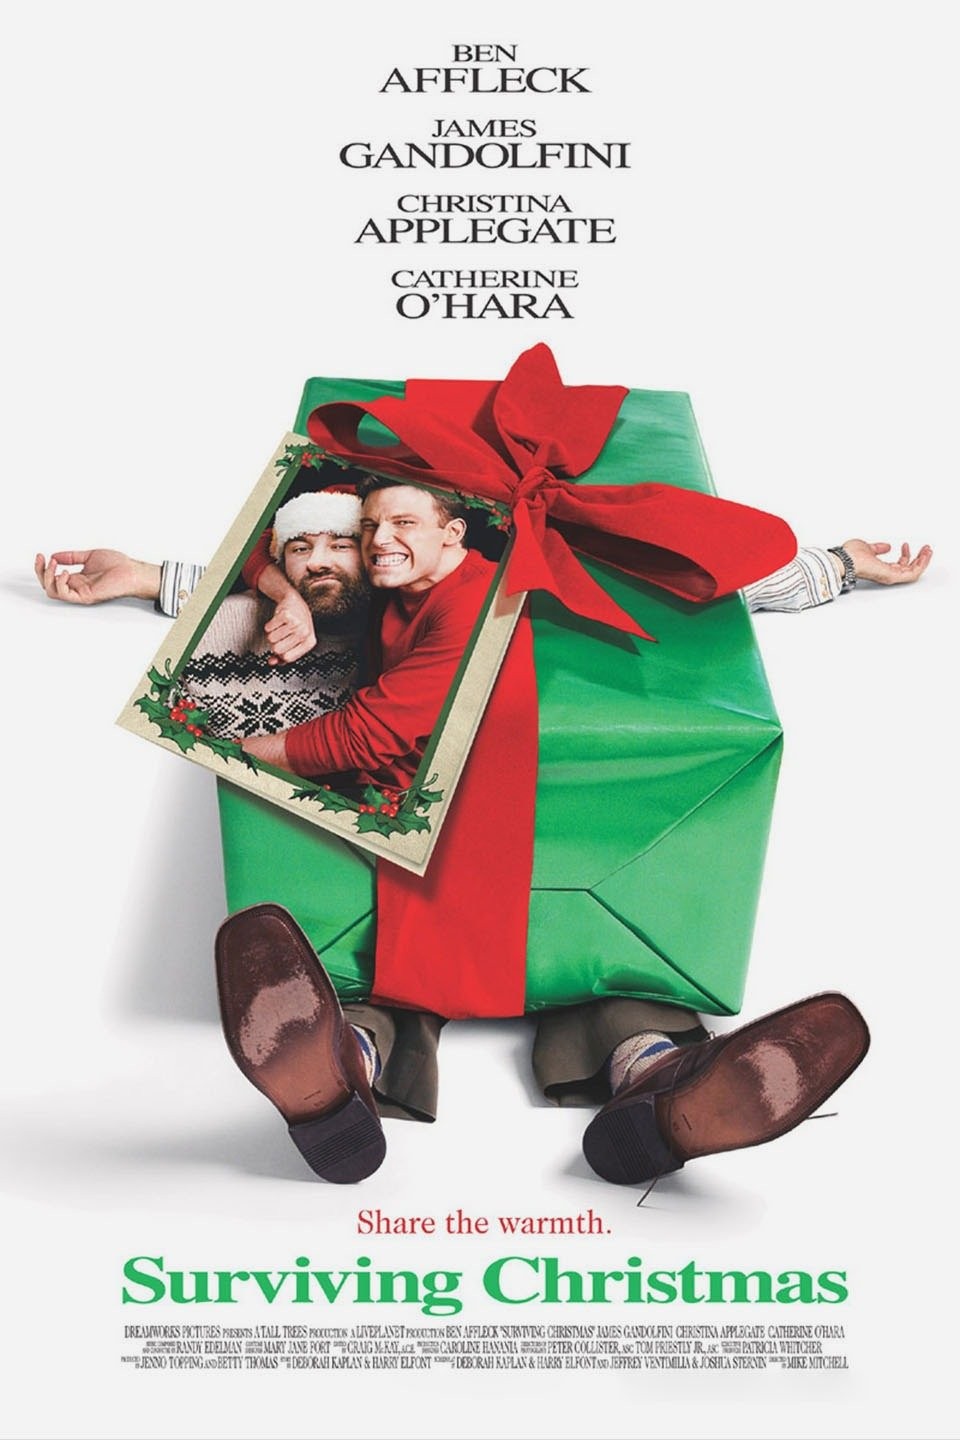 Watch Christmas Mail (2010) - Free Movies